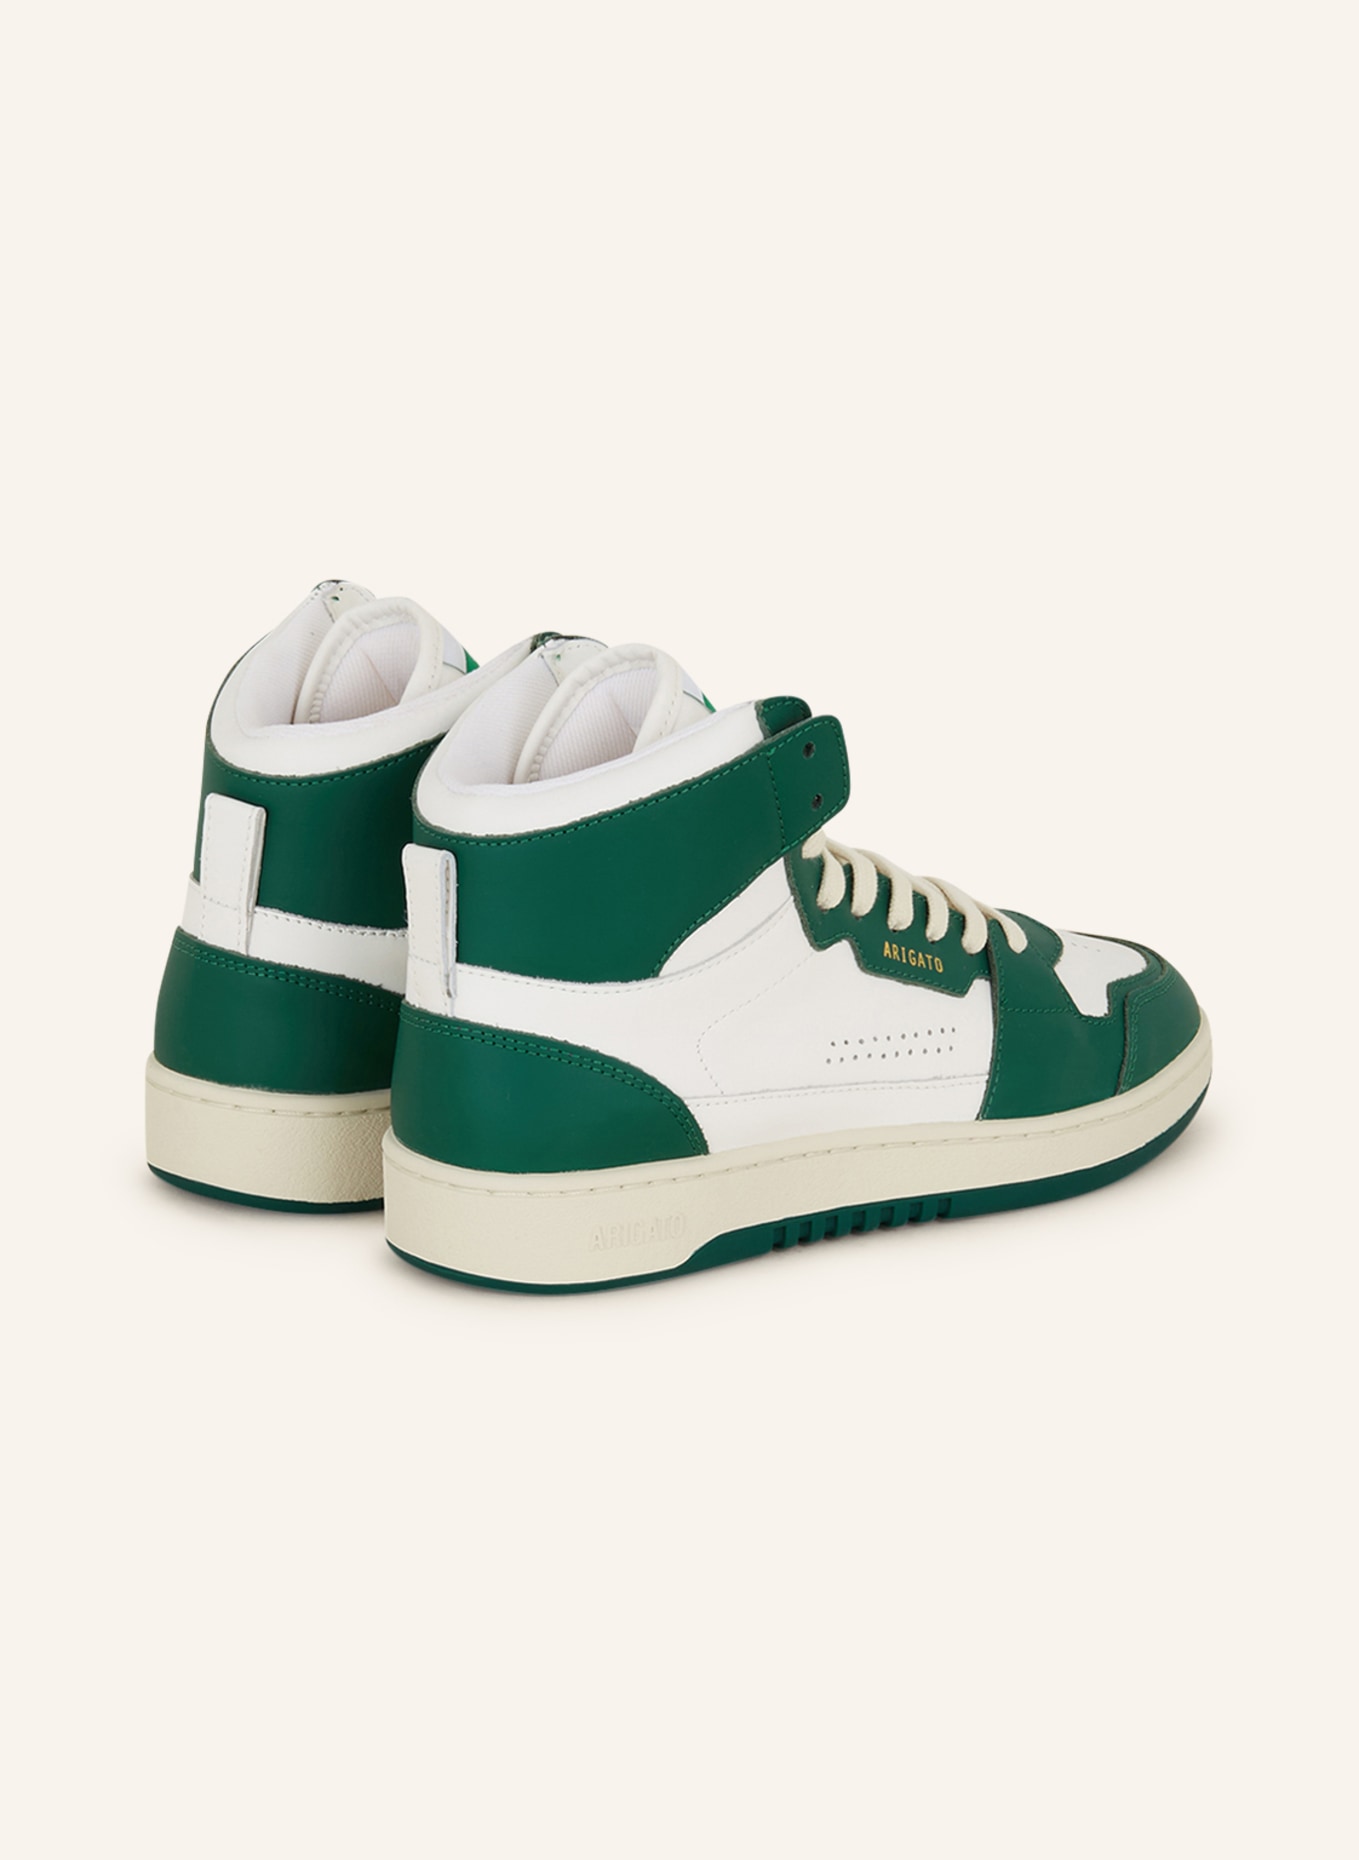 AXEL ARIGATO Hightop-Sneaker DICE HI, Farbe: WEISS/ GRÜN (Bild 2)